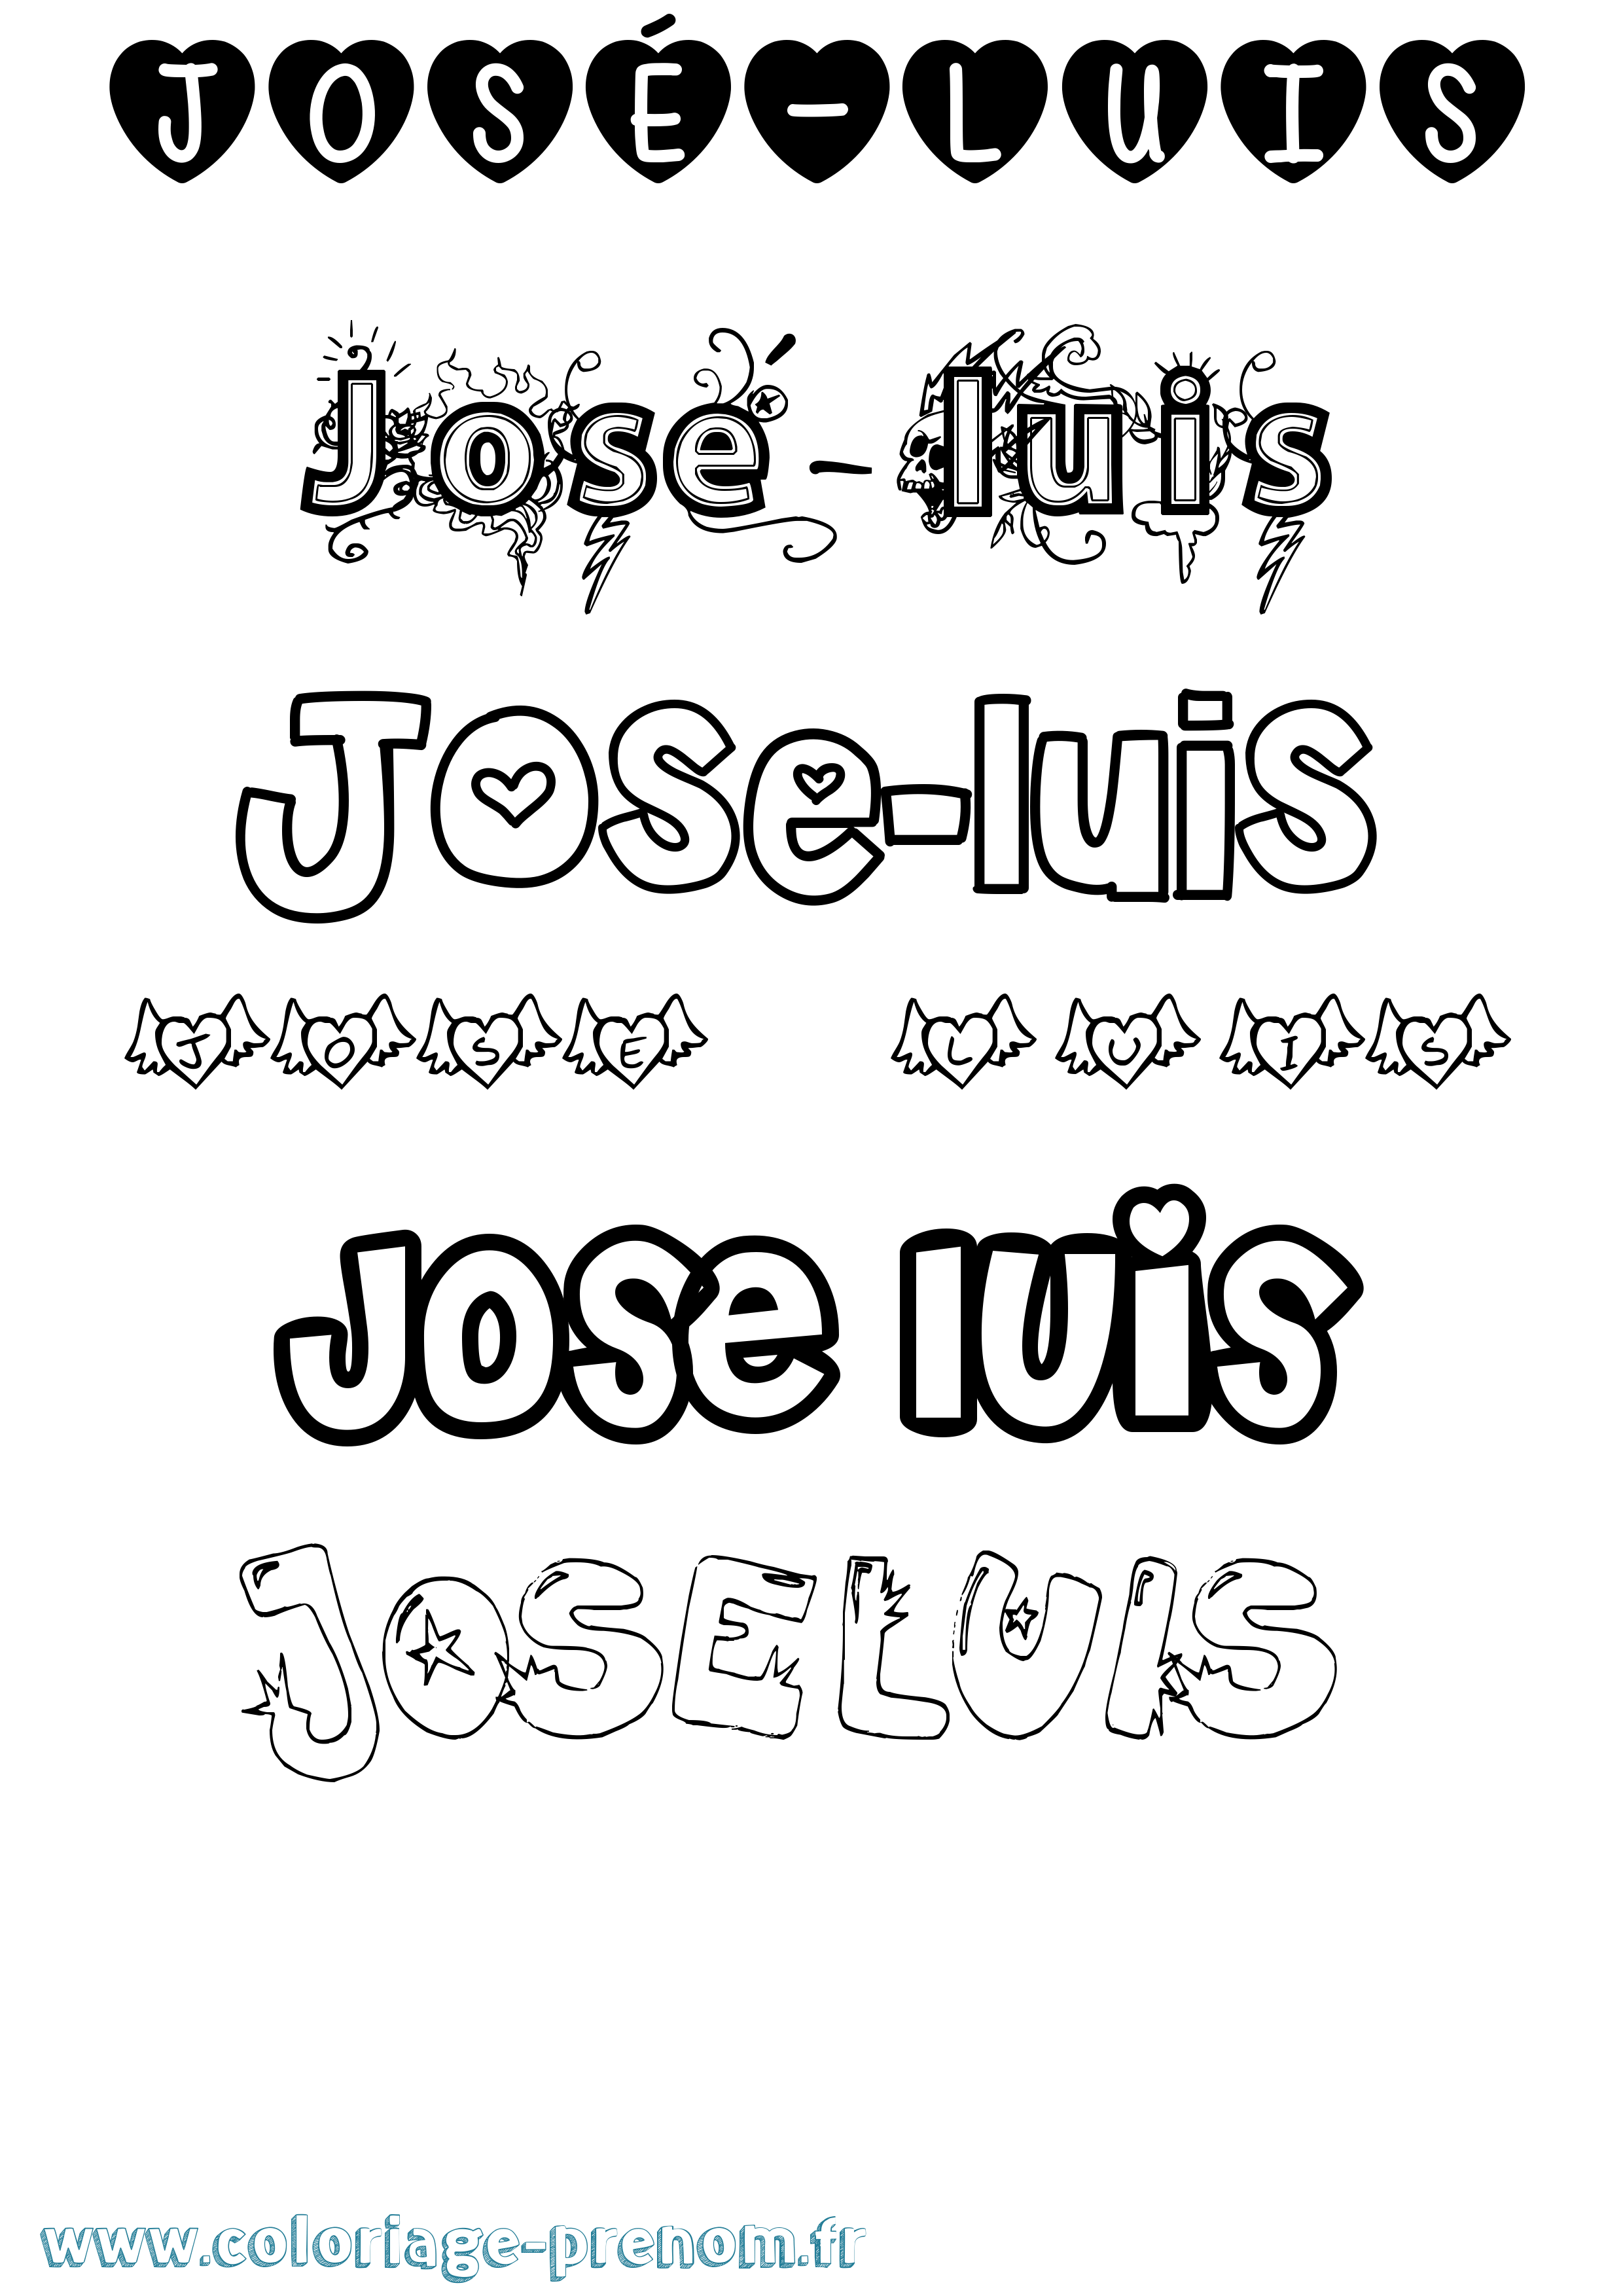 Coloriage prénom José-Luis Girly